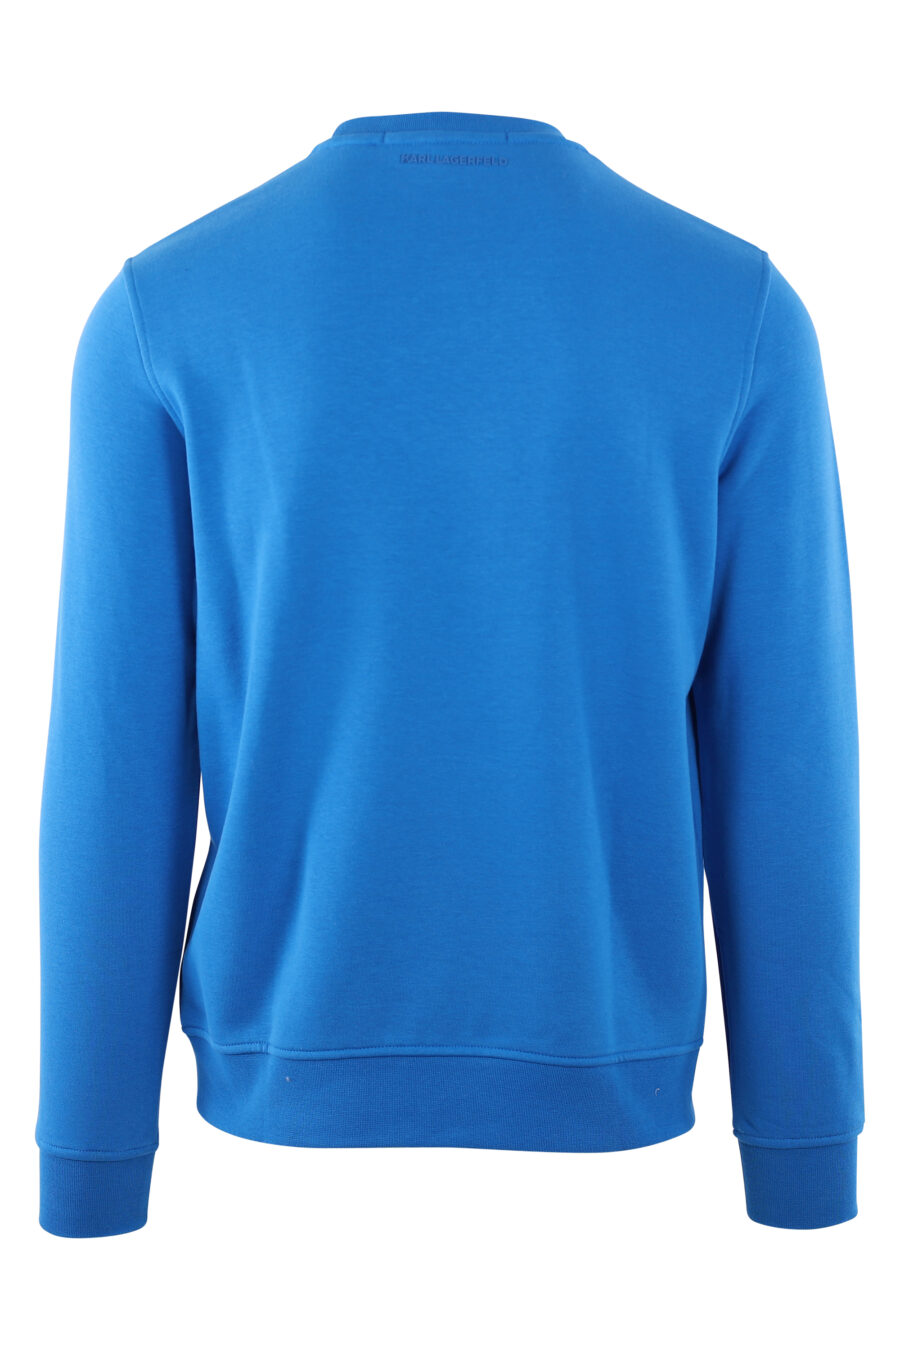 Blaues Sweatshirt mit "rue st-guillaume"-Logo - IMG 2839 1